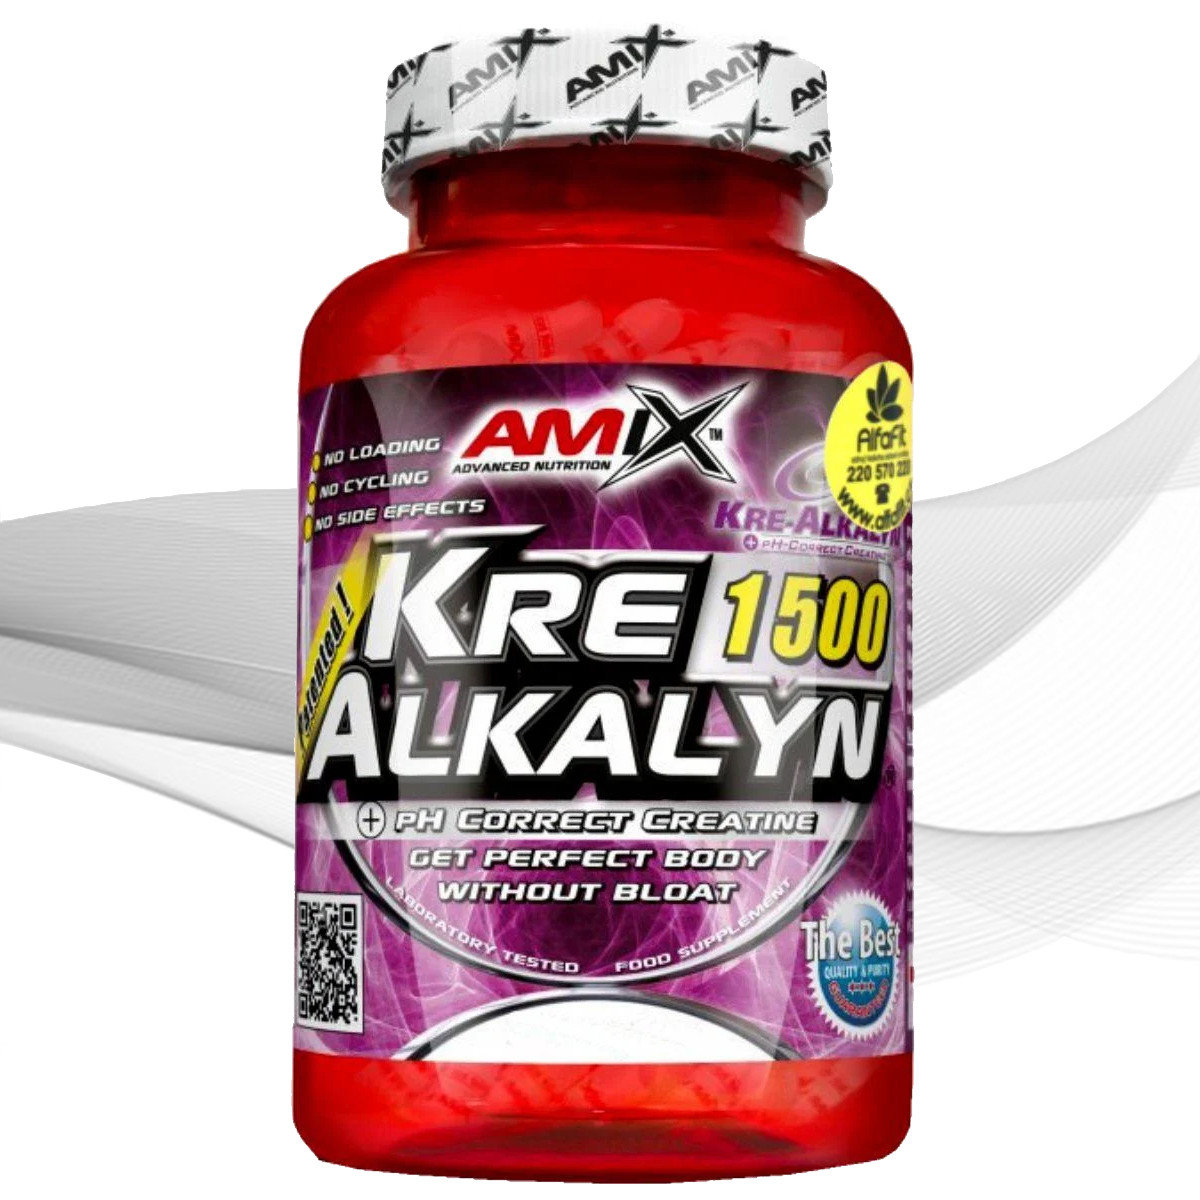 Креатин Amix Nutrition Kre-Alkalyn® 150 гц